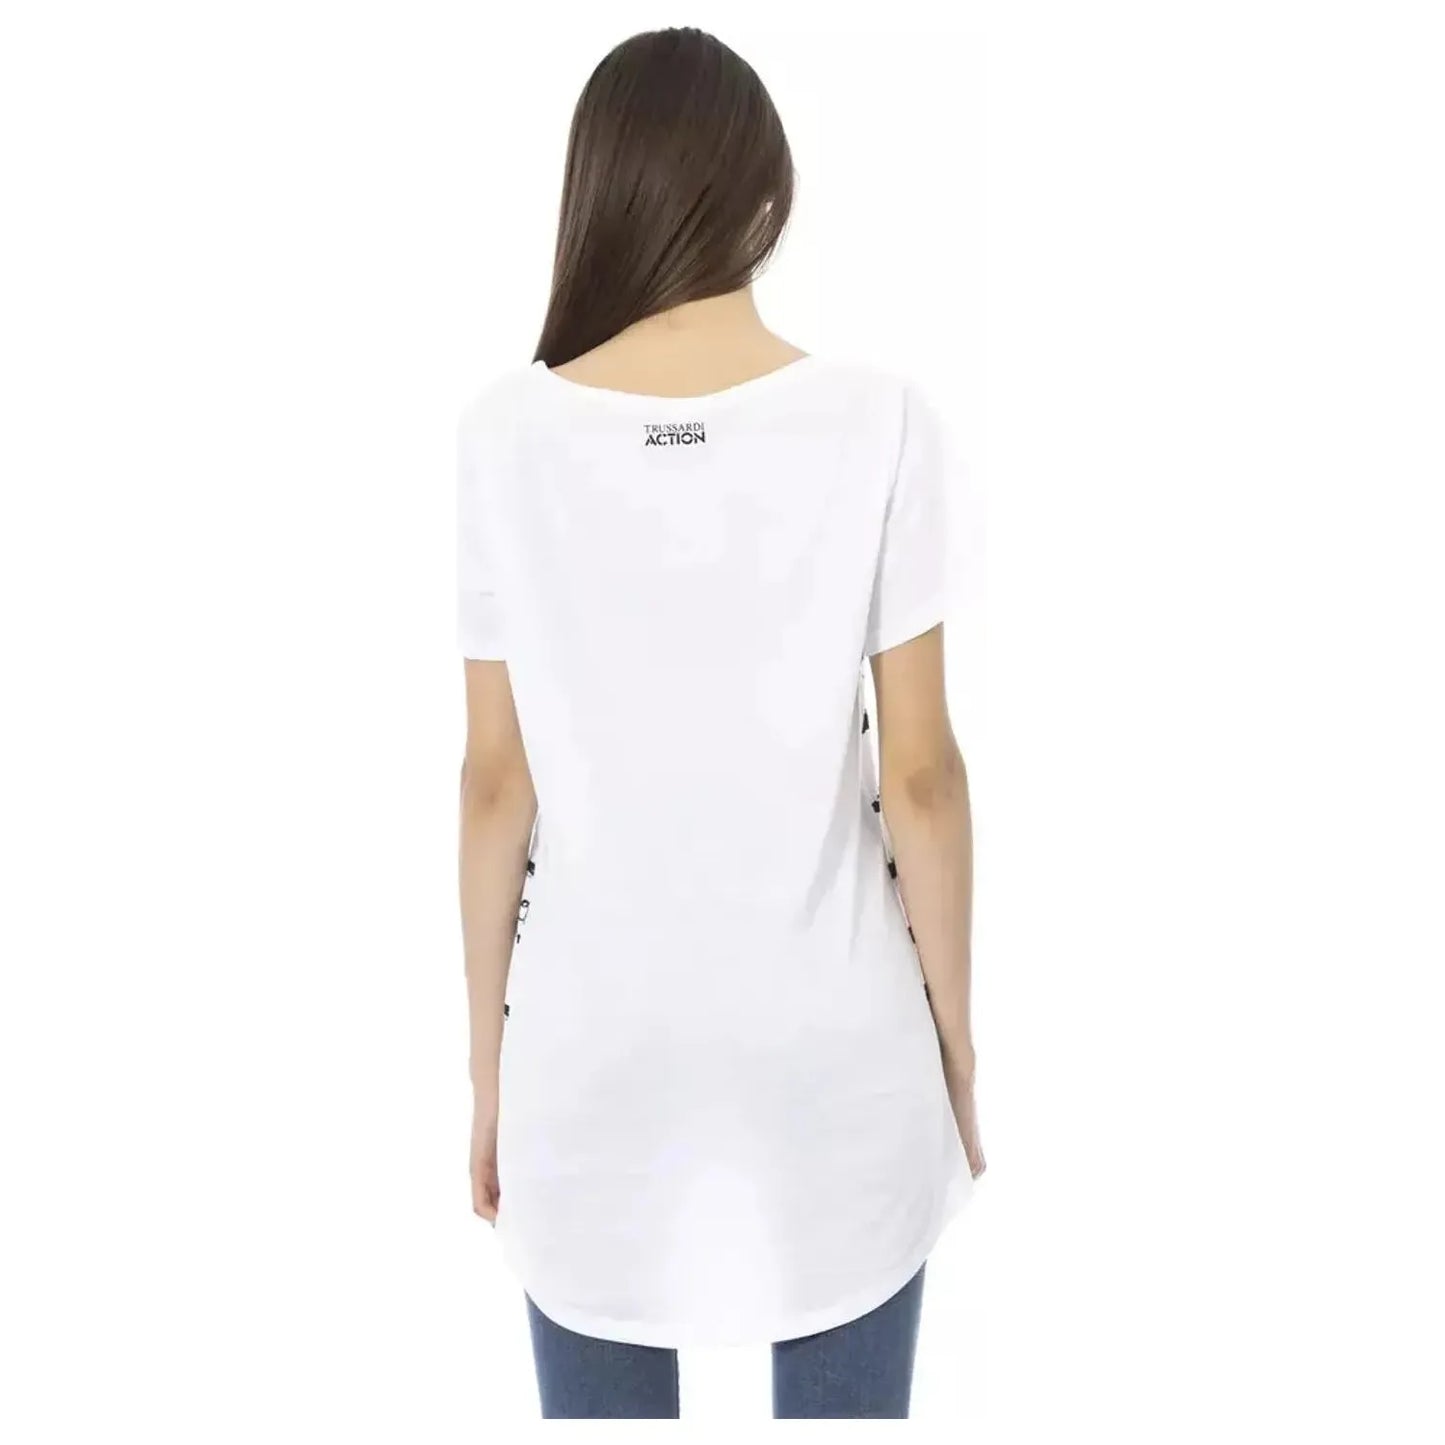 Trussardi Action Chic White Cotton Blend Tee white-cotton-tops-t-shirt-108